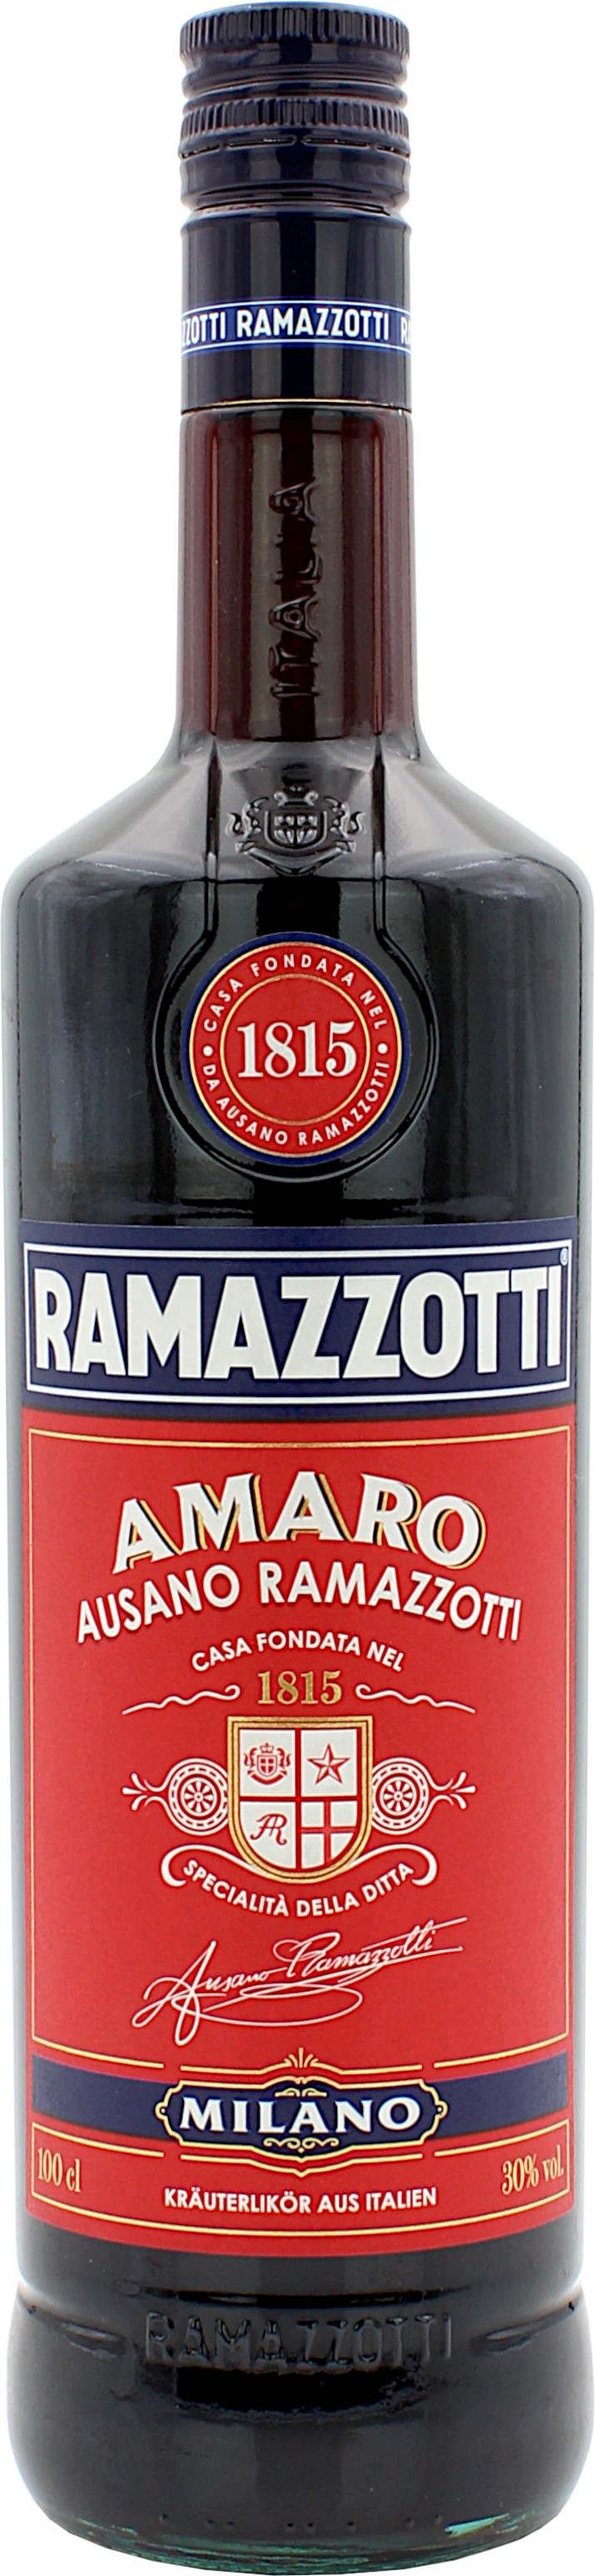 Ramazzotti Amaro 30.0% 1 Liter